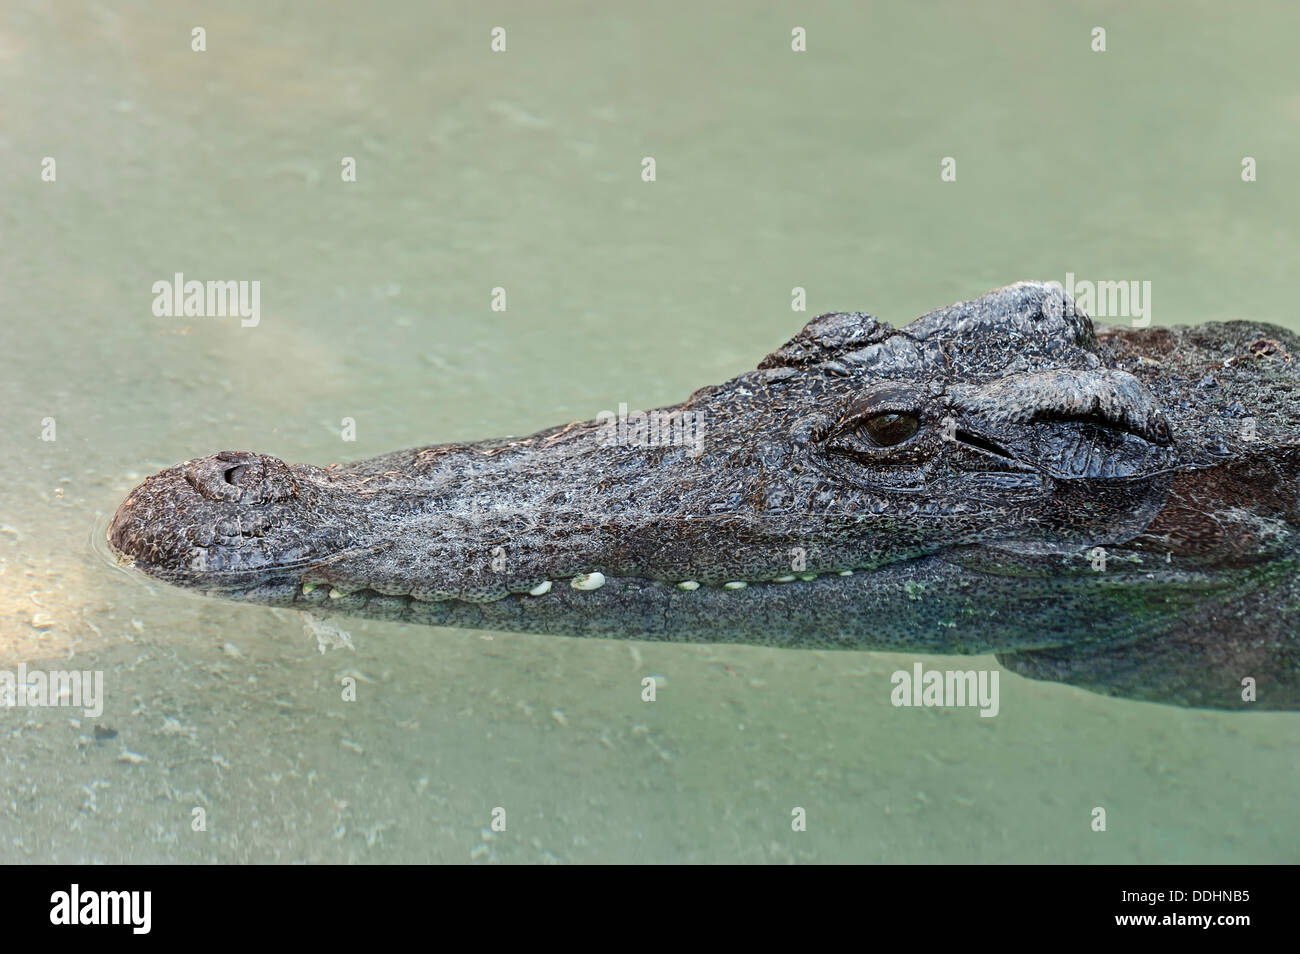 Los siameses (Crocodylus siamensis), retrato, cautiva Foto de stock